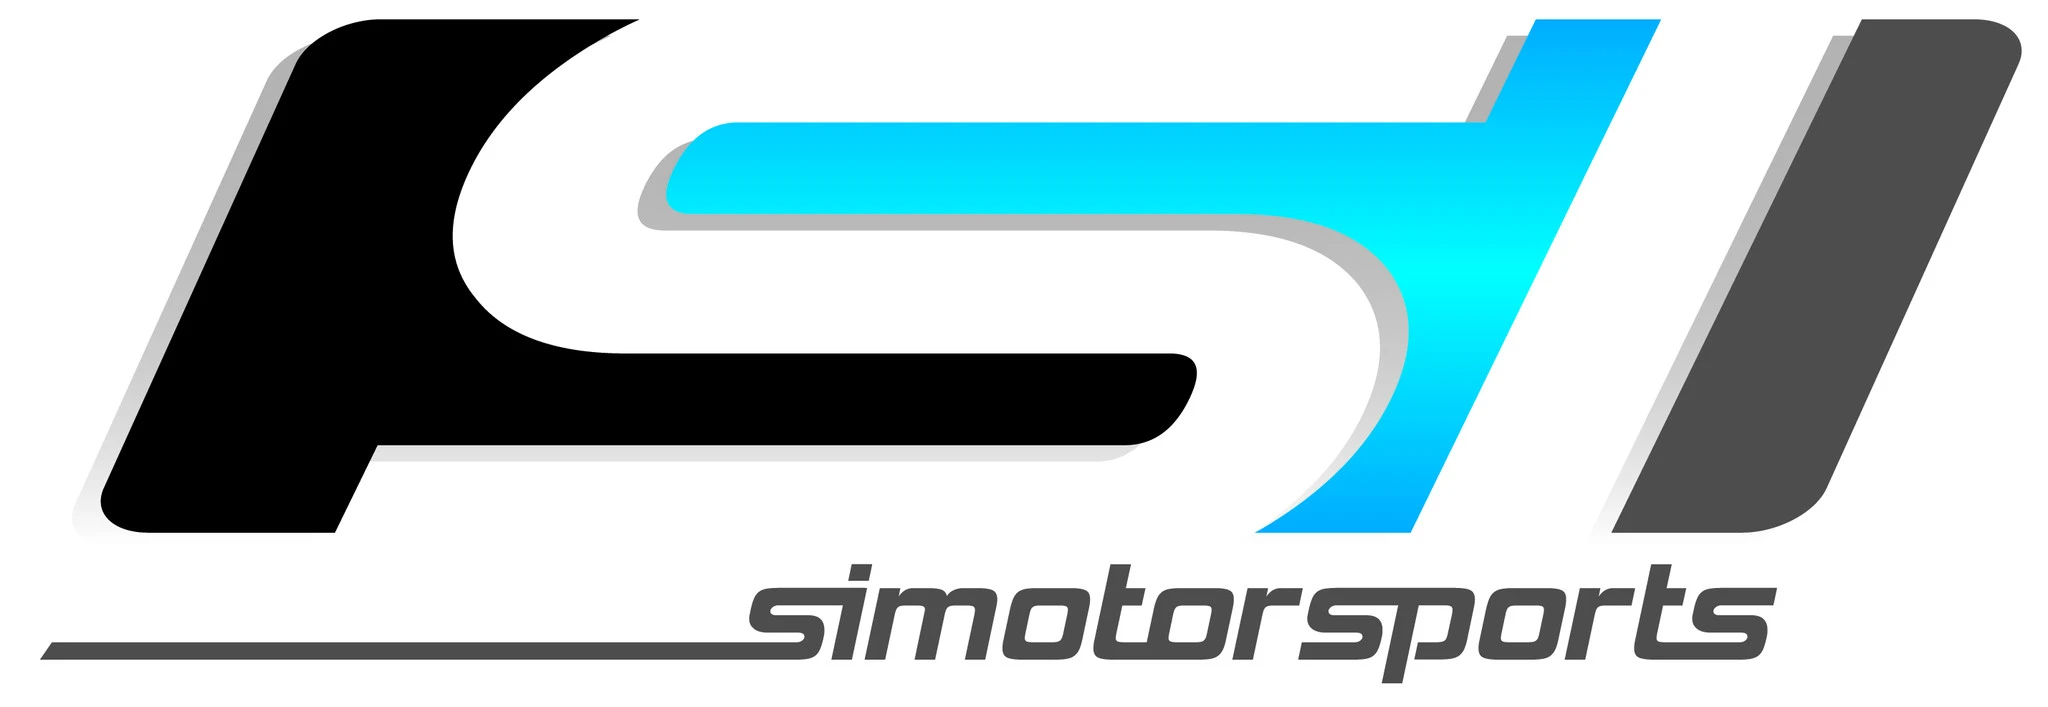 simotorsports